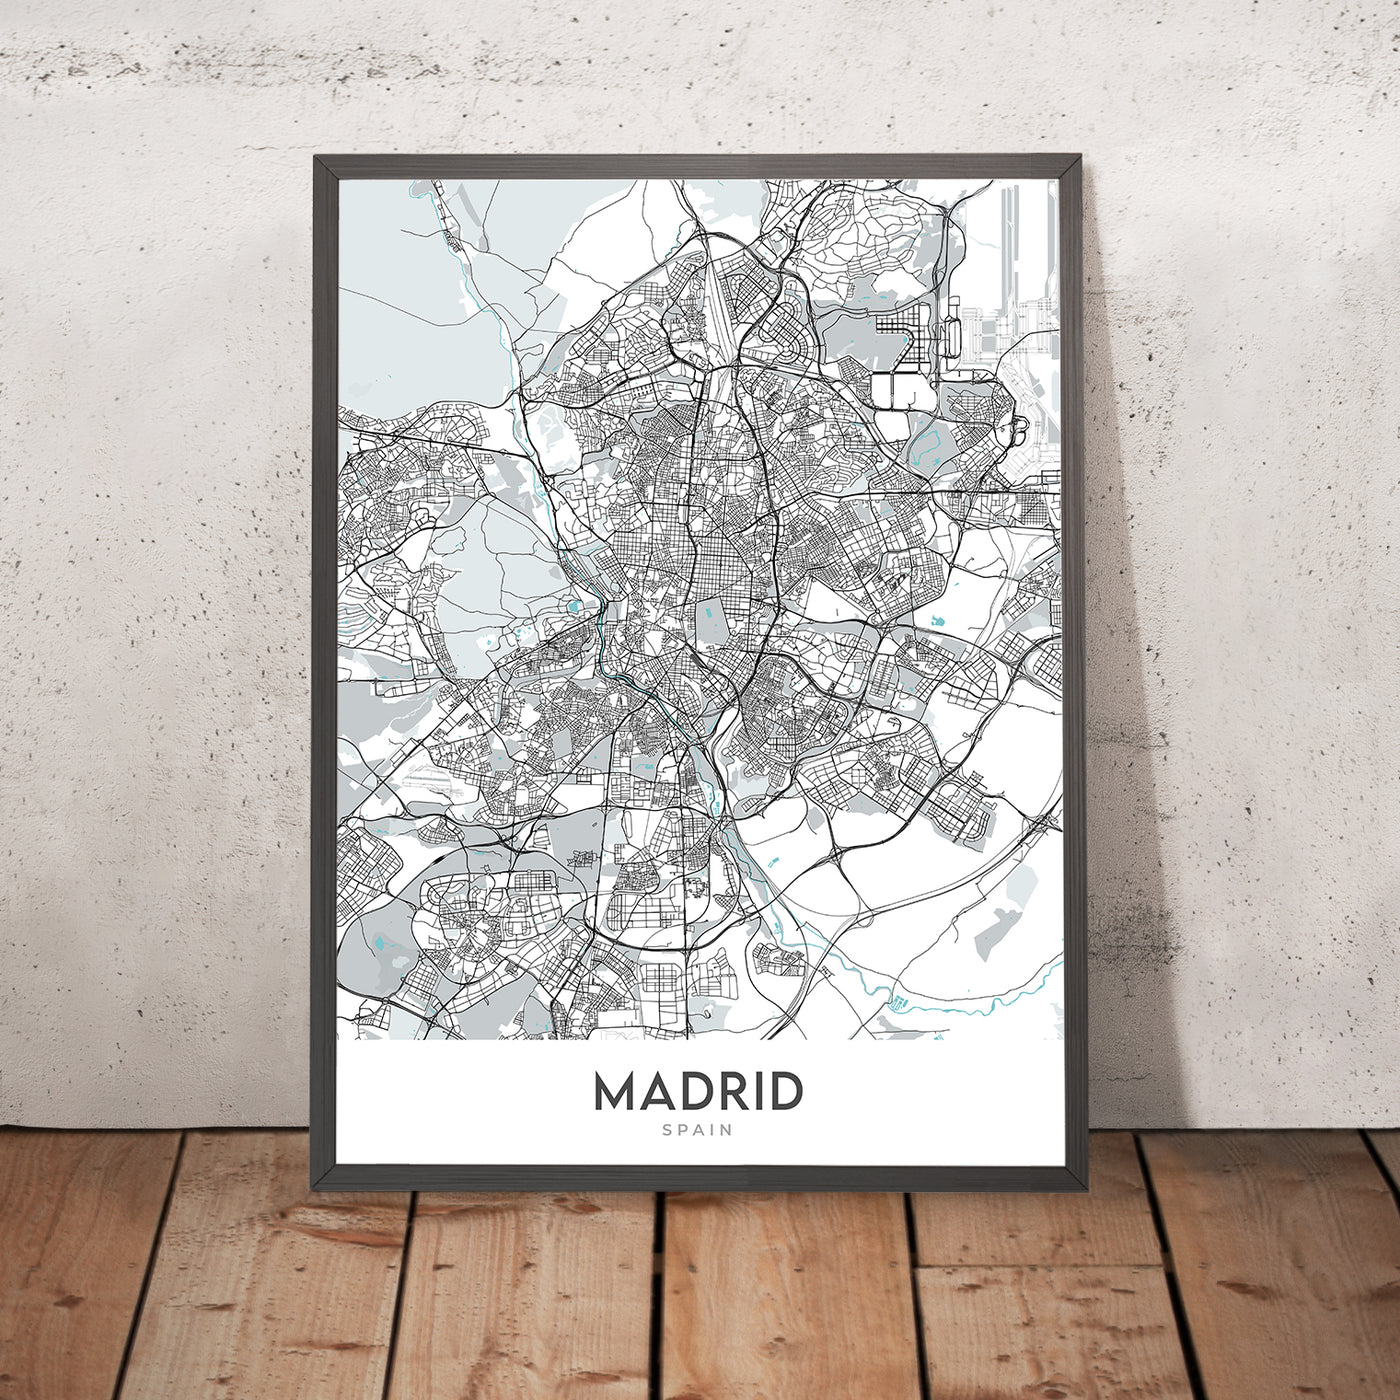 Modern City Map of Madrid, Spain: Royal Palace, Prado, Retiro, Gran Vía, Casa de Campo